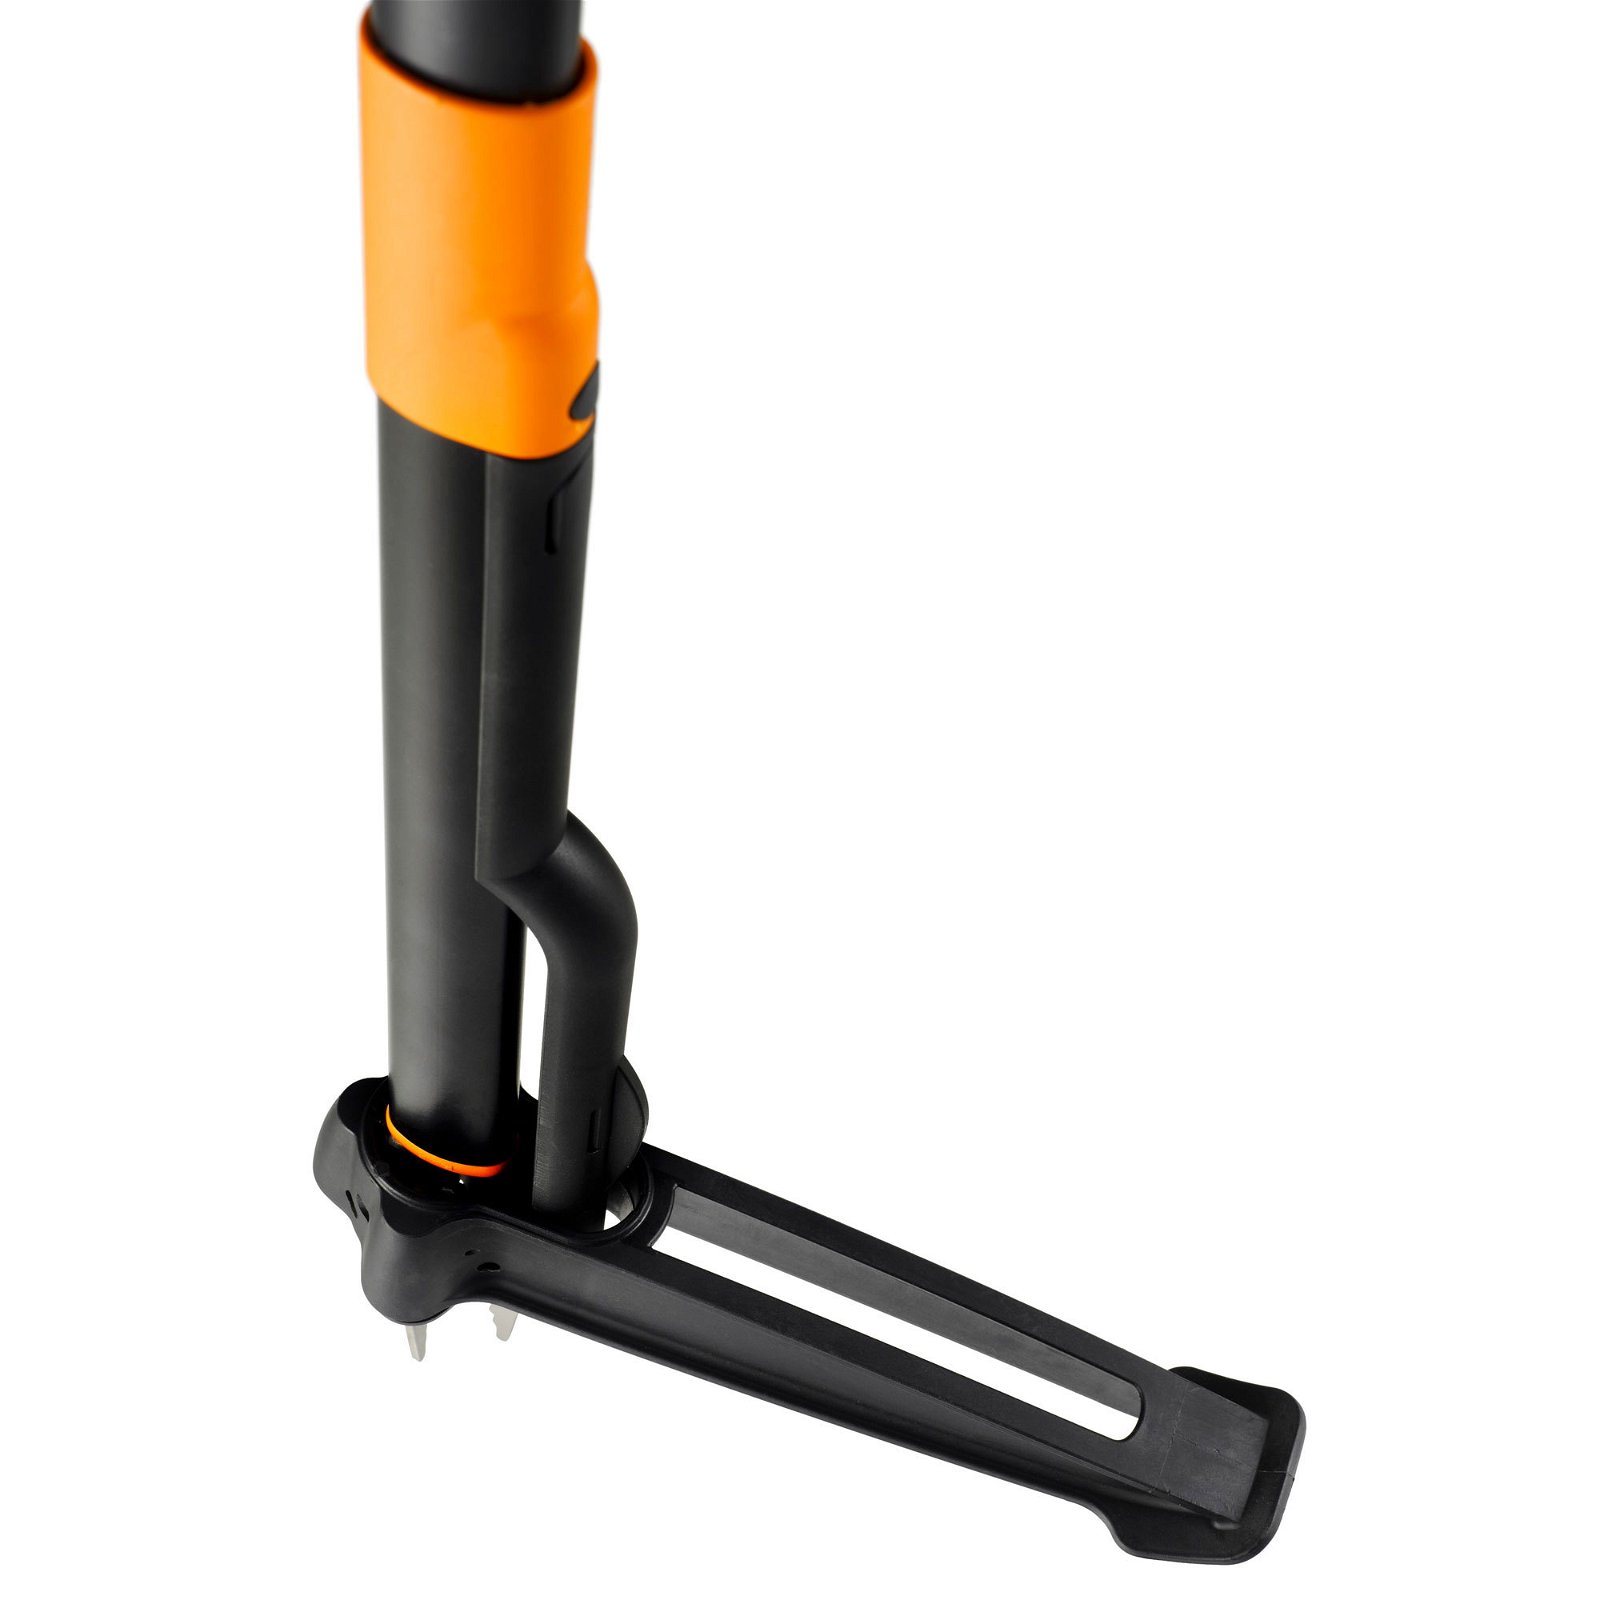 Xact Unkrautstecher, schwarz/orange, Länge 100 cm